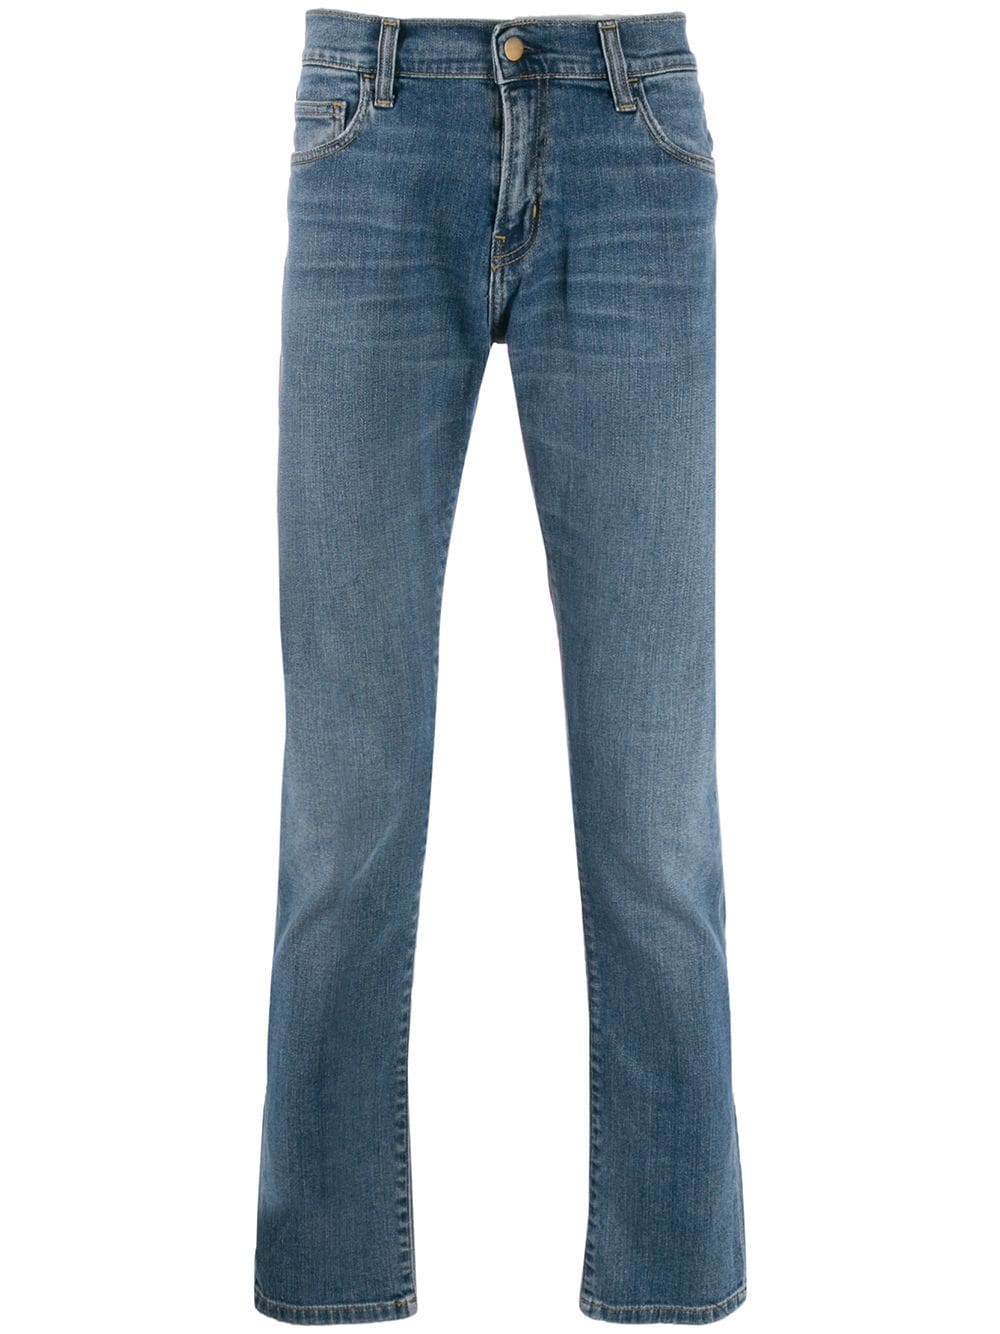 Carhartt WIP Rebel jeans | Smart Closet